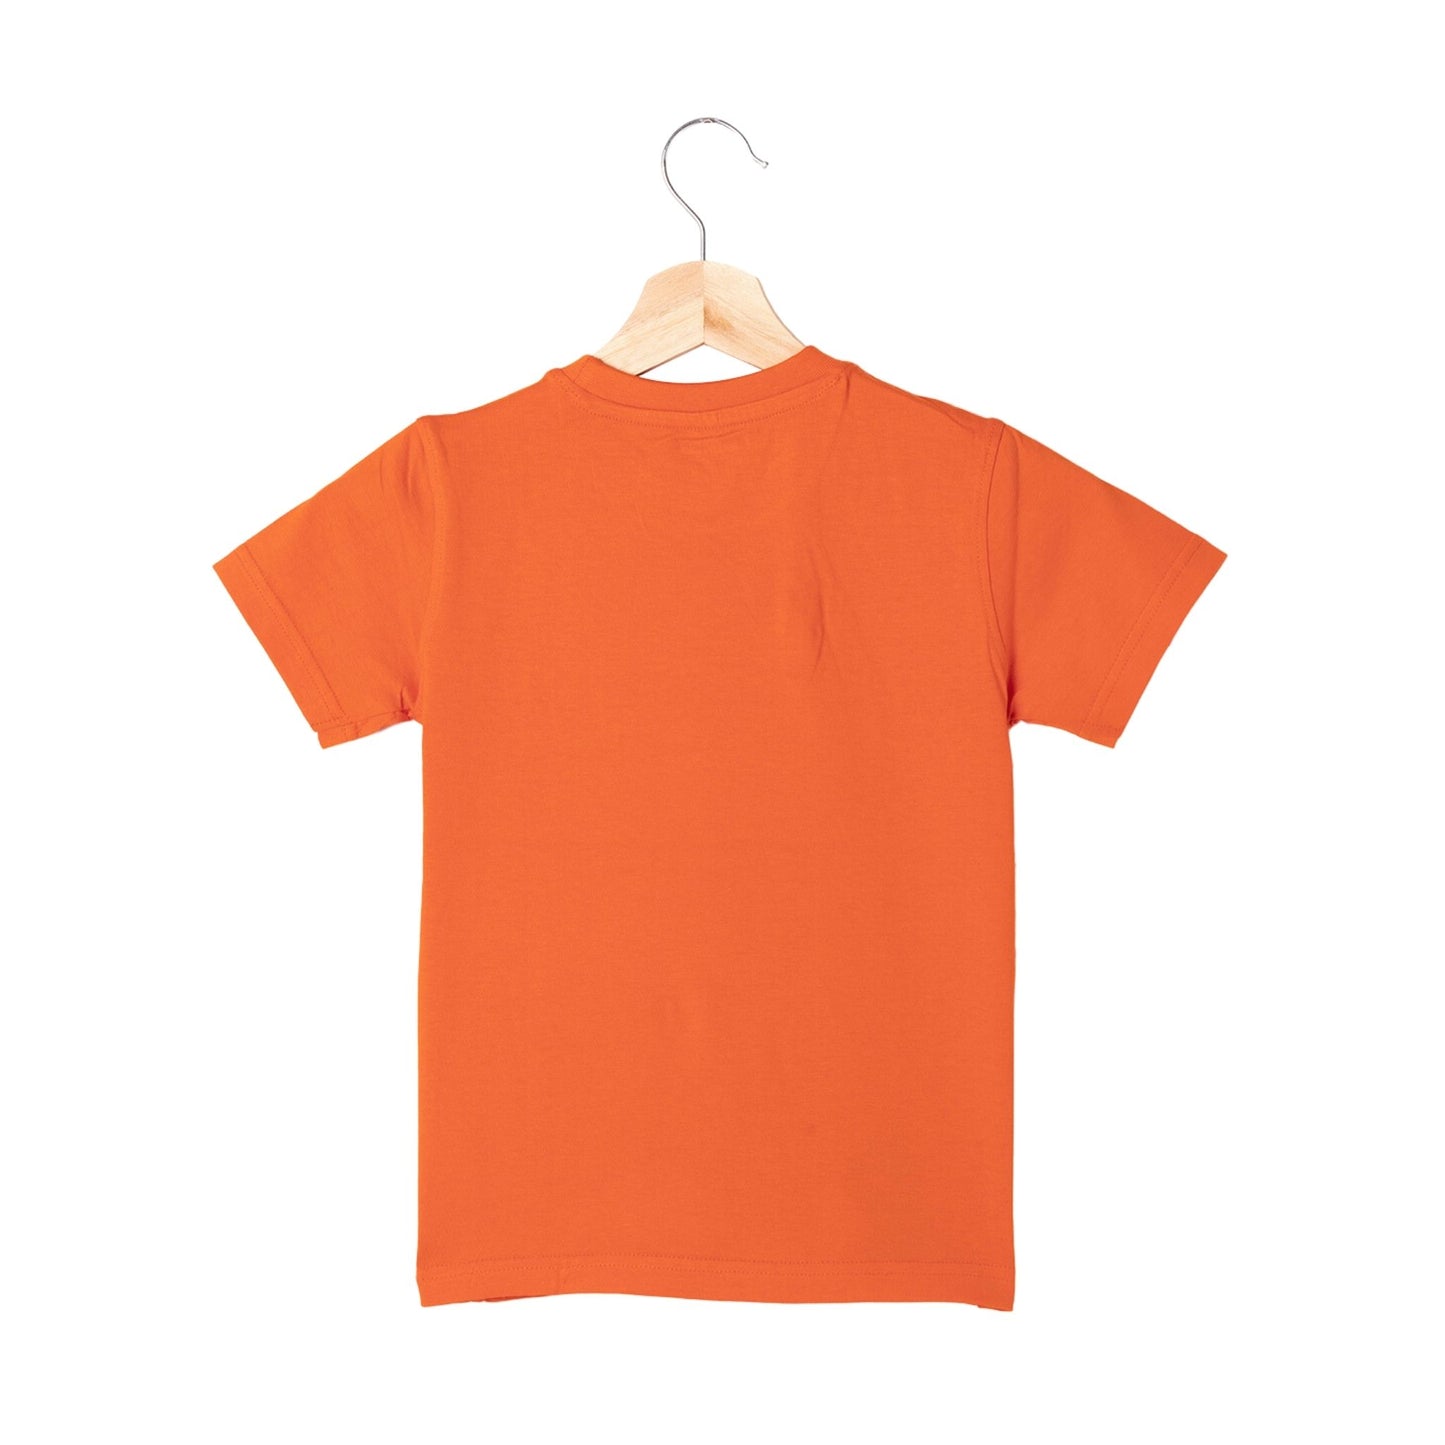 Frog Print Boys Cotton T-shirt (Rust Orange)